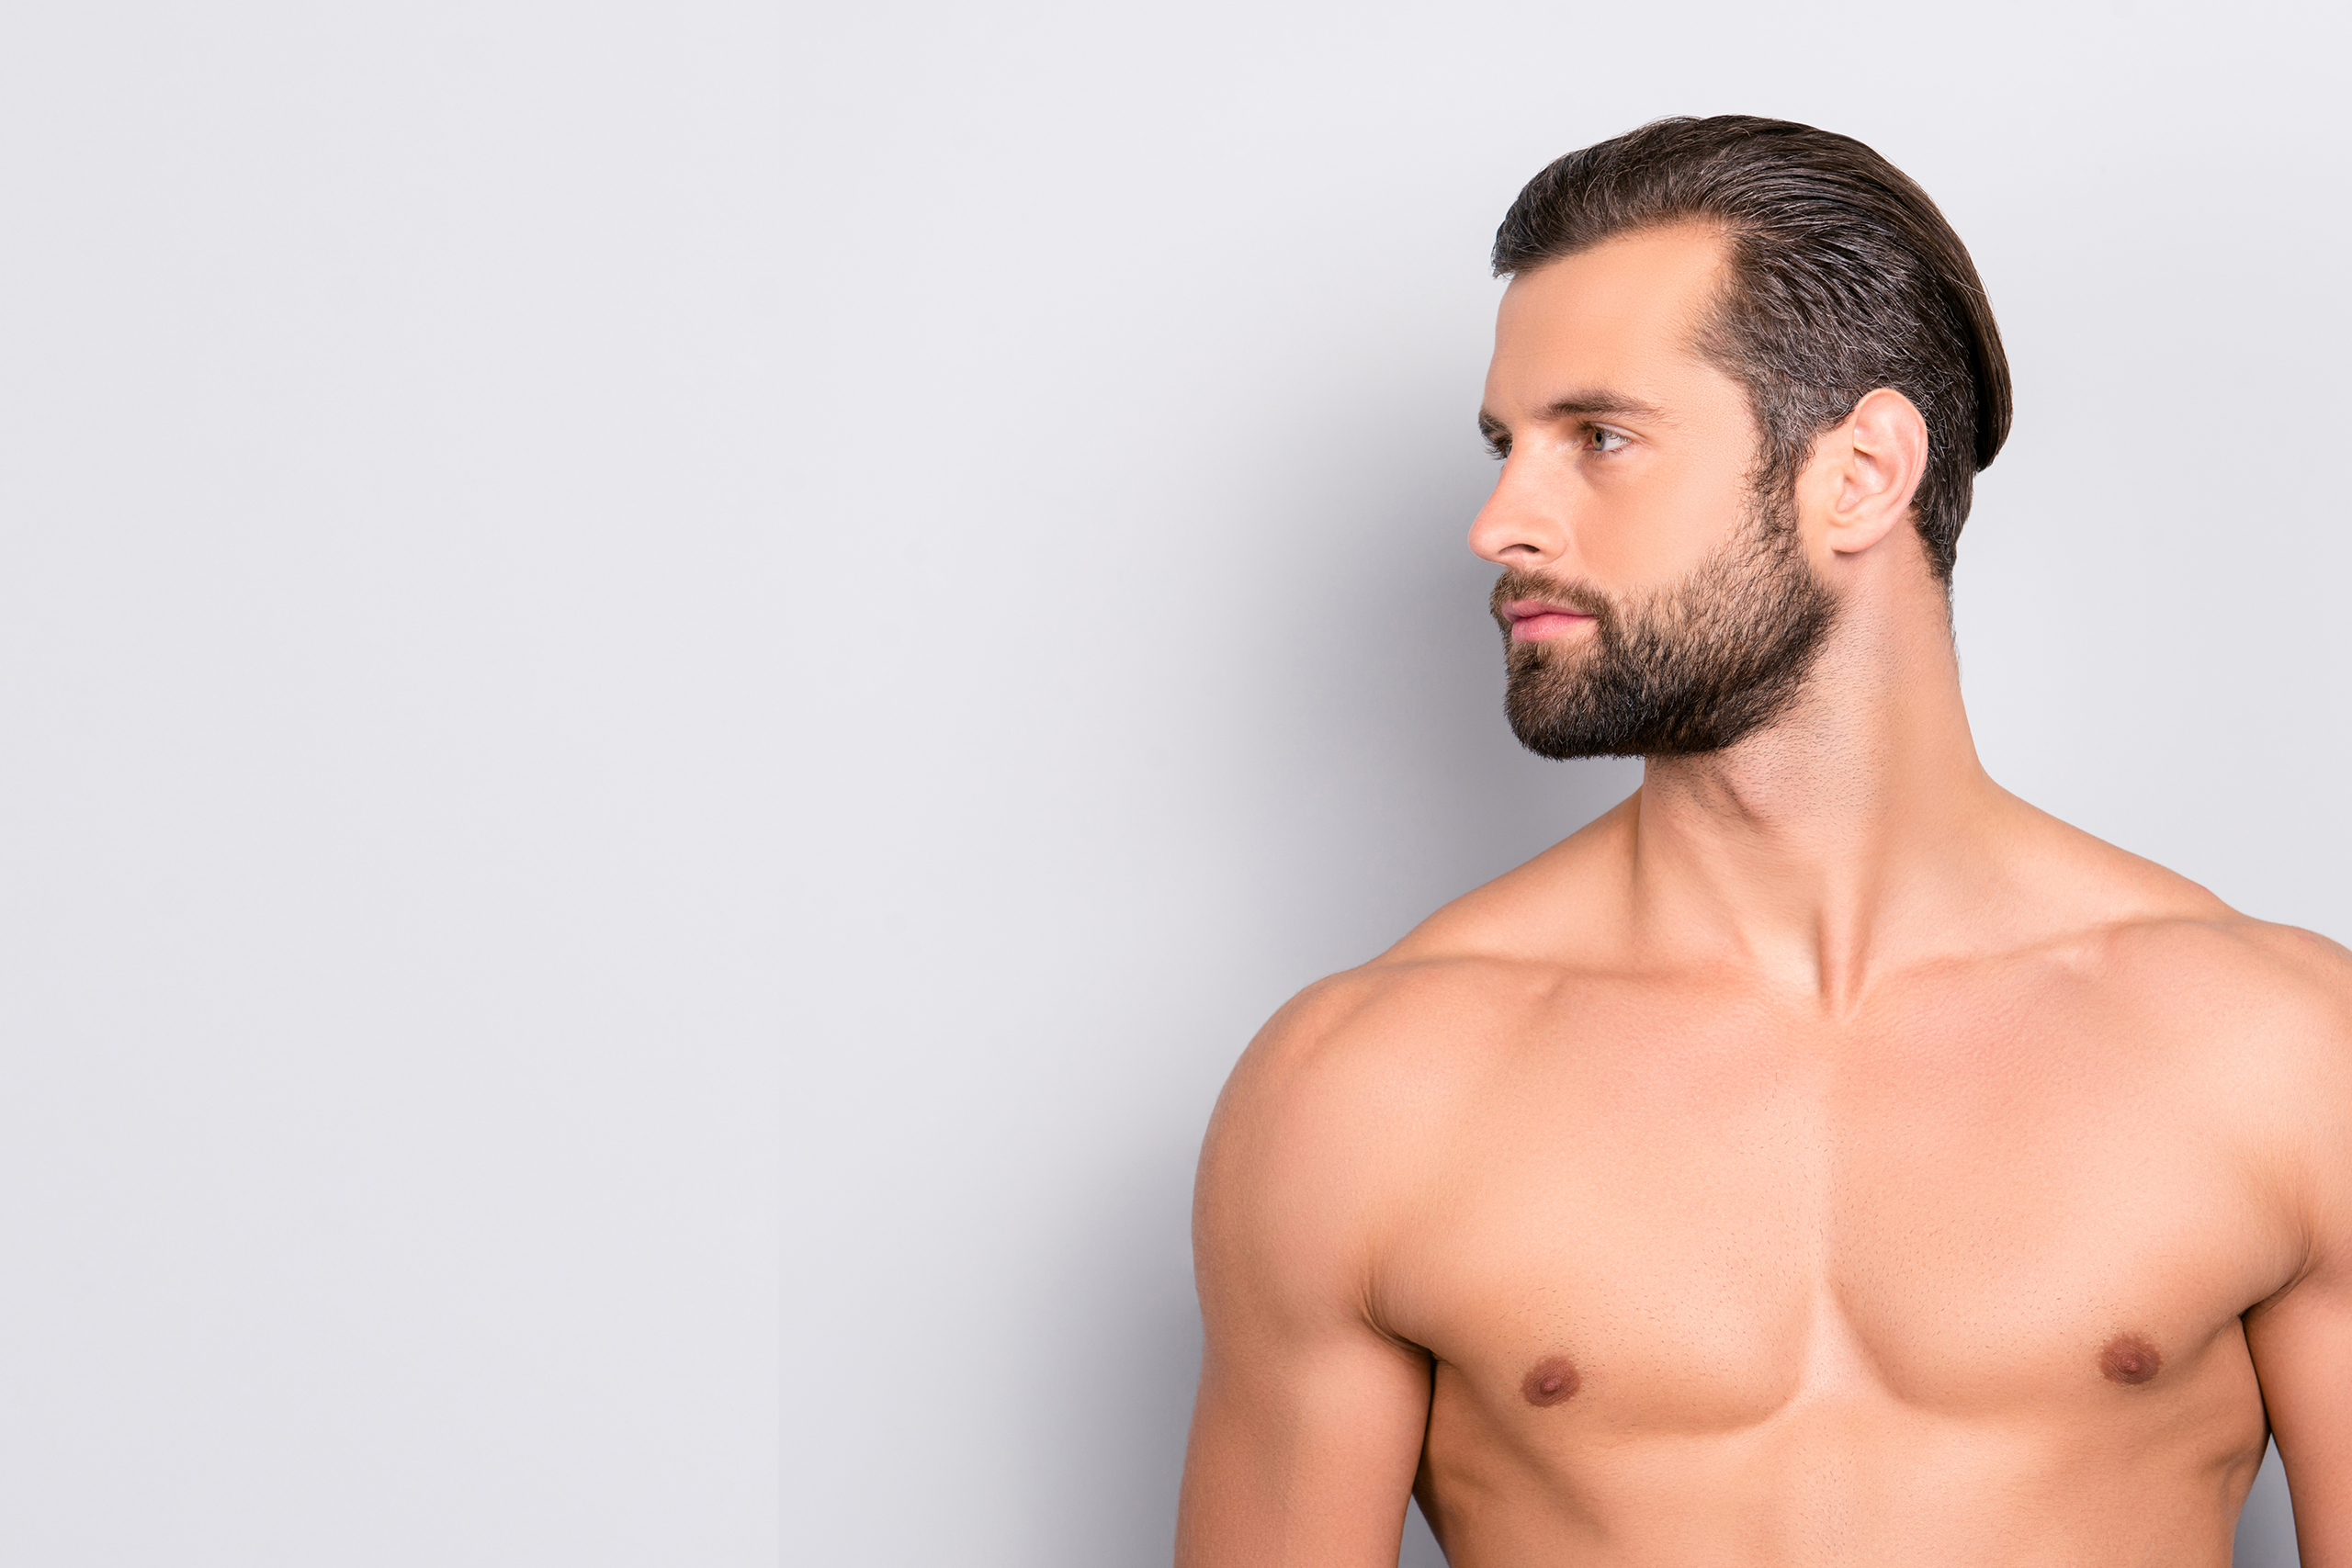 Male Chest Reduction - Gynecomastia Surgery, Men Boobs Lipo London